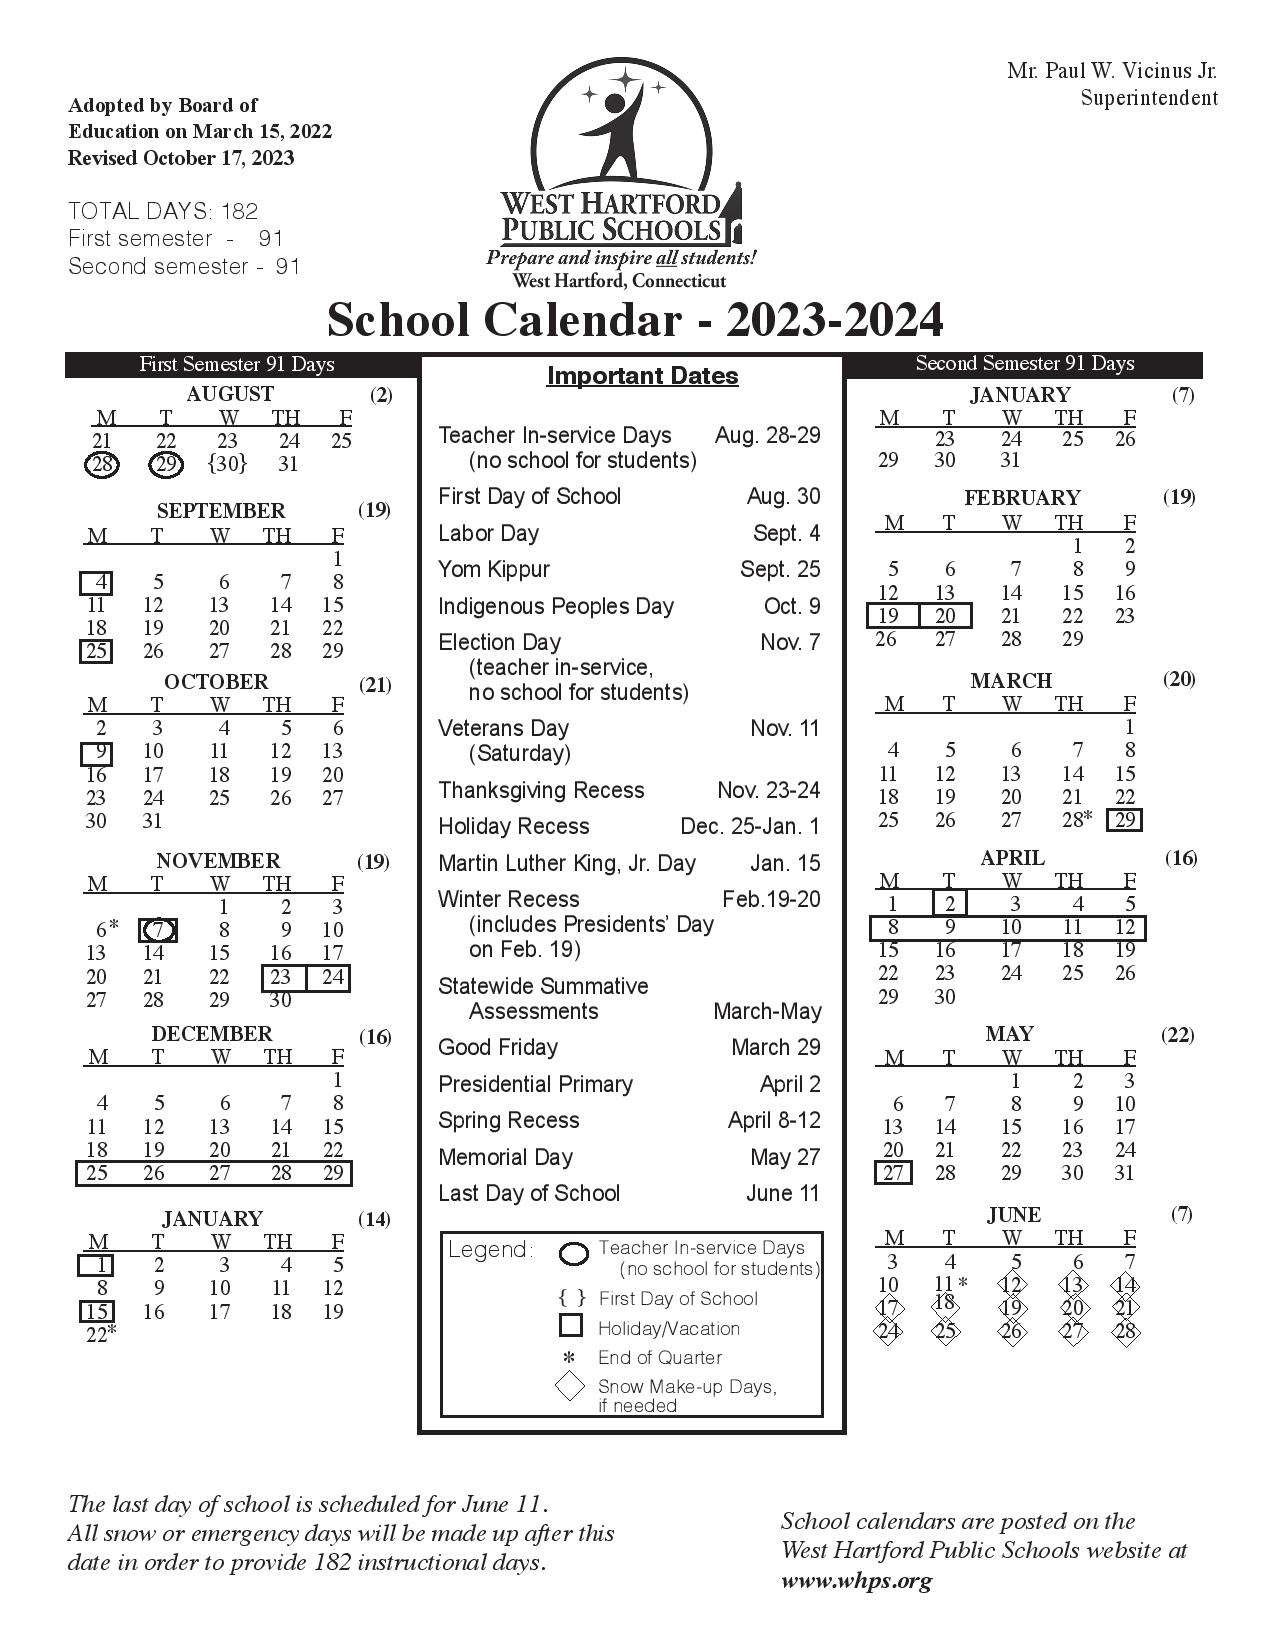 West Hartford Public Schools Calendar 20232024 in PDF